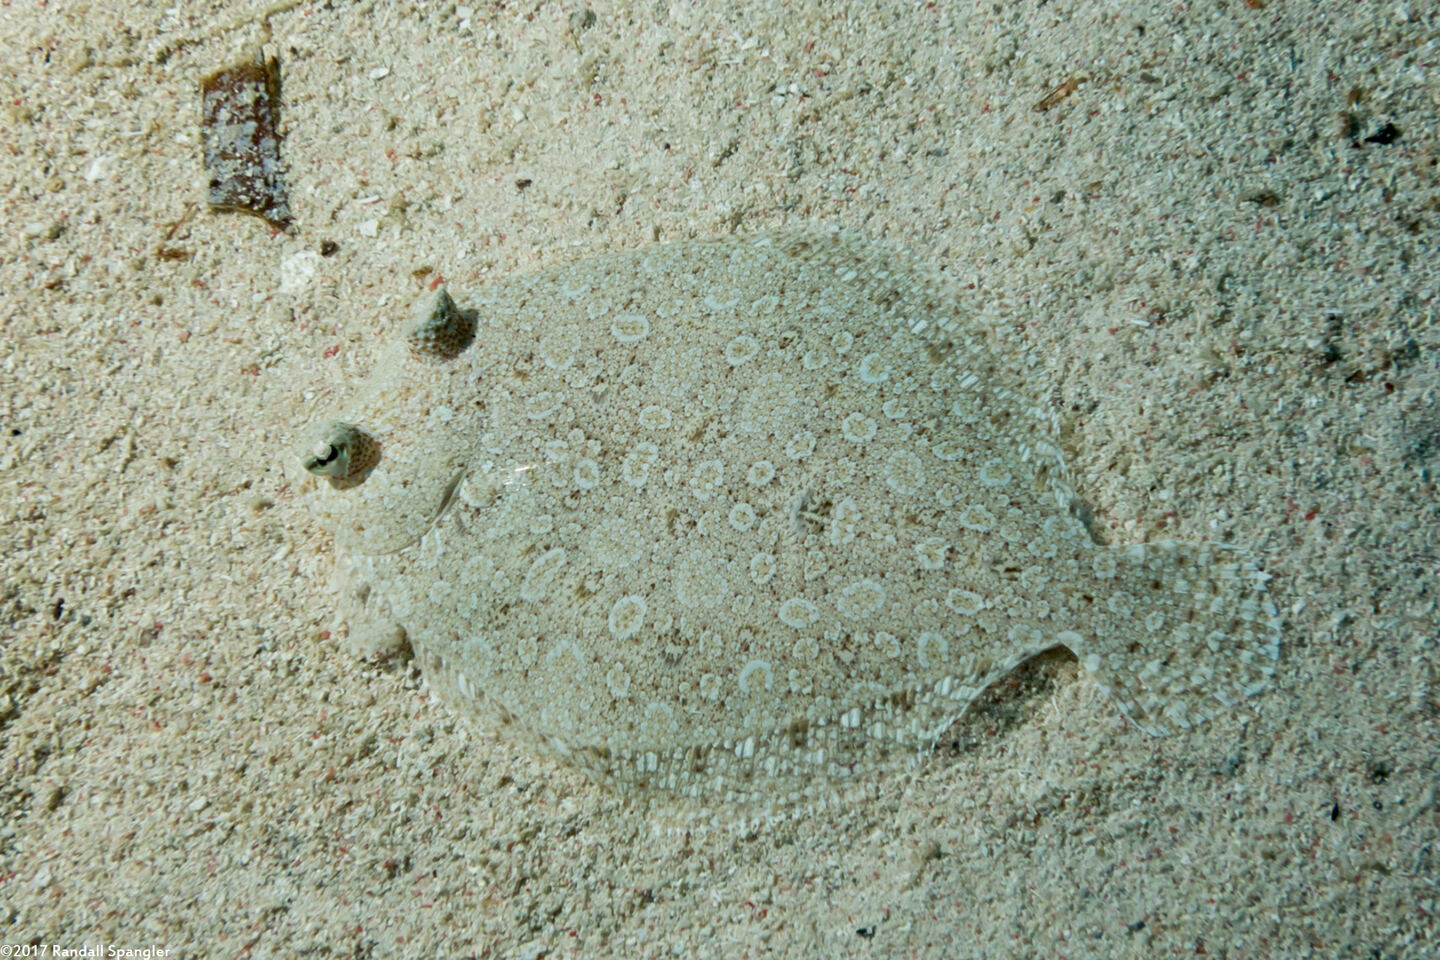 Bothus ocellatus (Eyed Flounder)